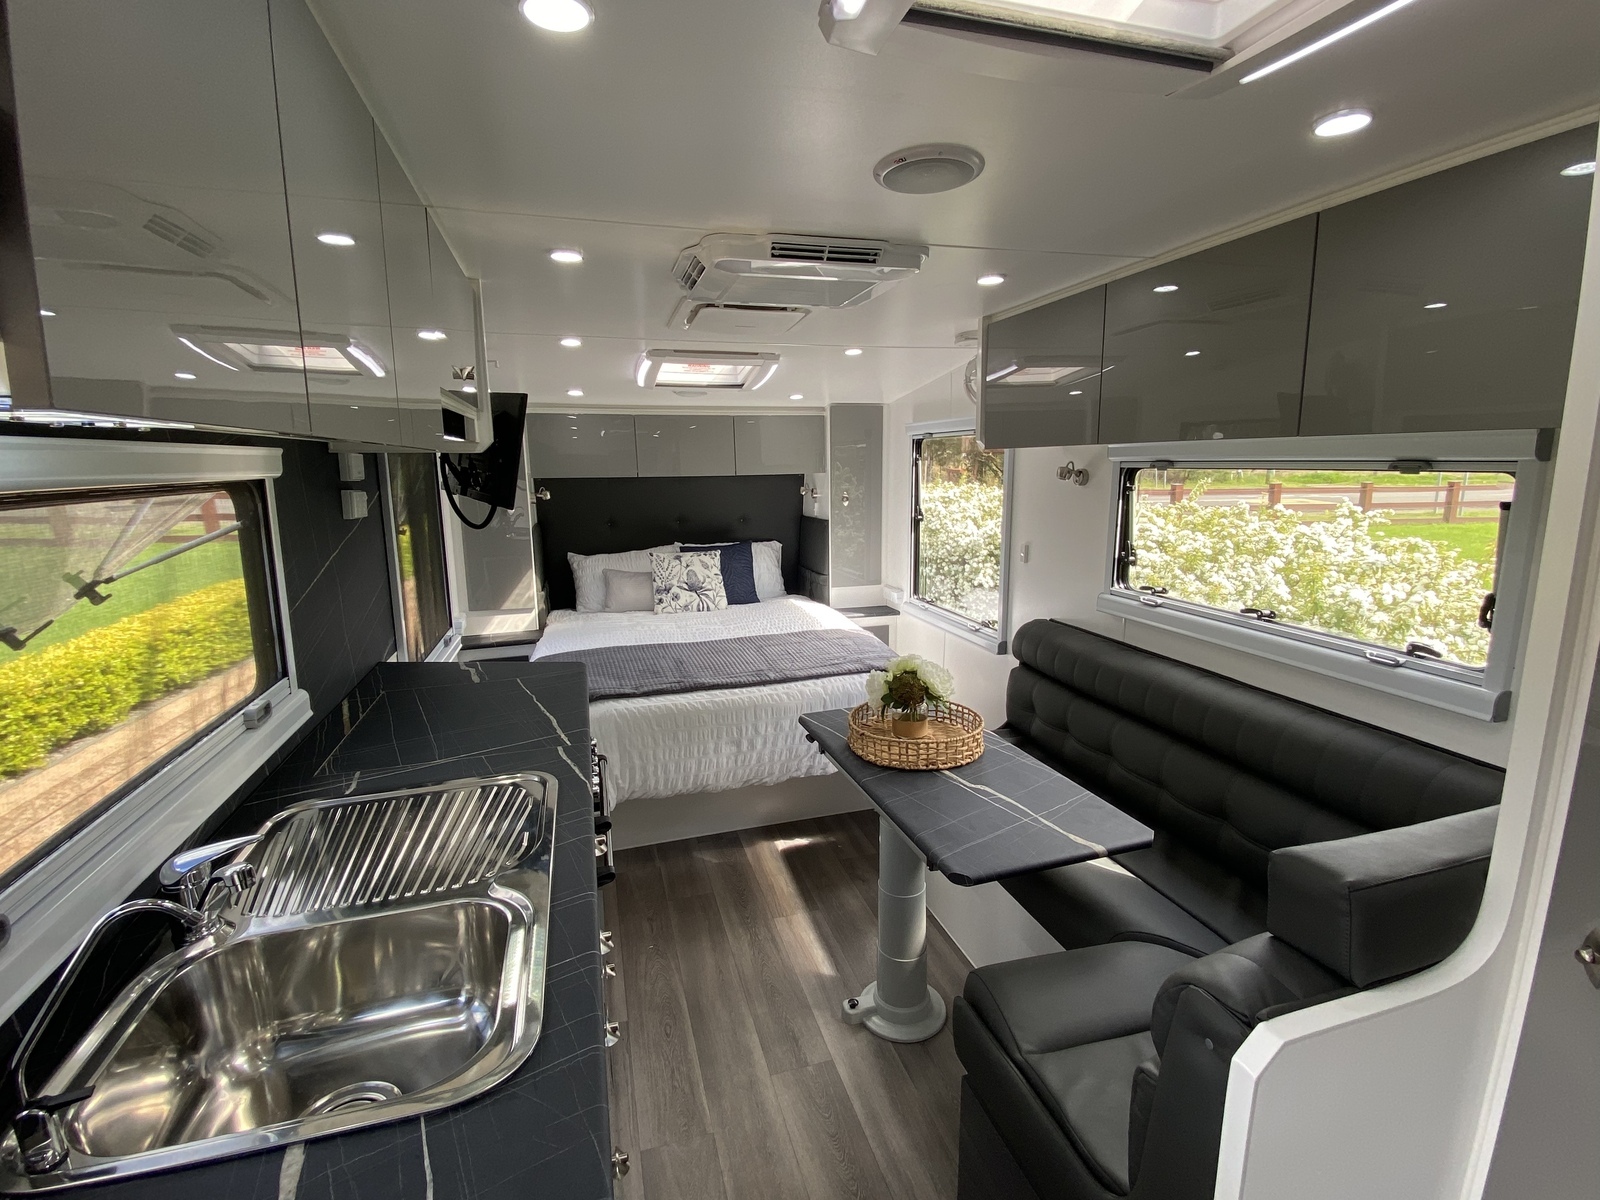 Luxury Caravan View of Kitchen and Bed